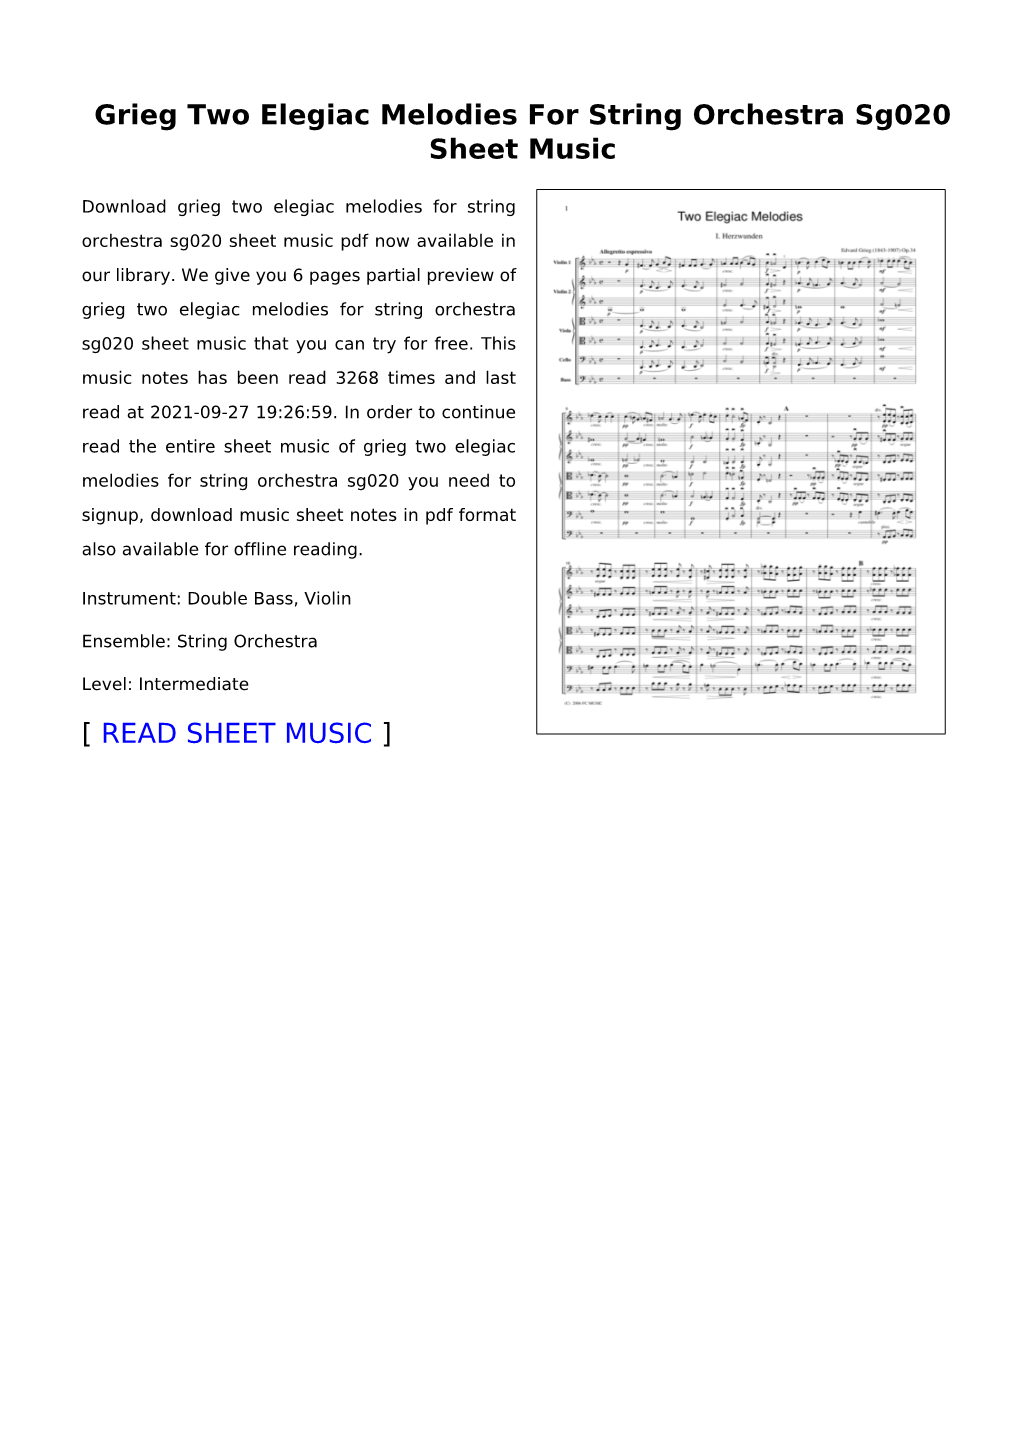 Grieg Two Elegiac Melodies for String Orchestra Sg020 Sheet Music